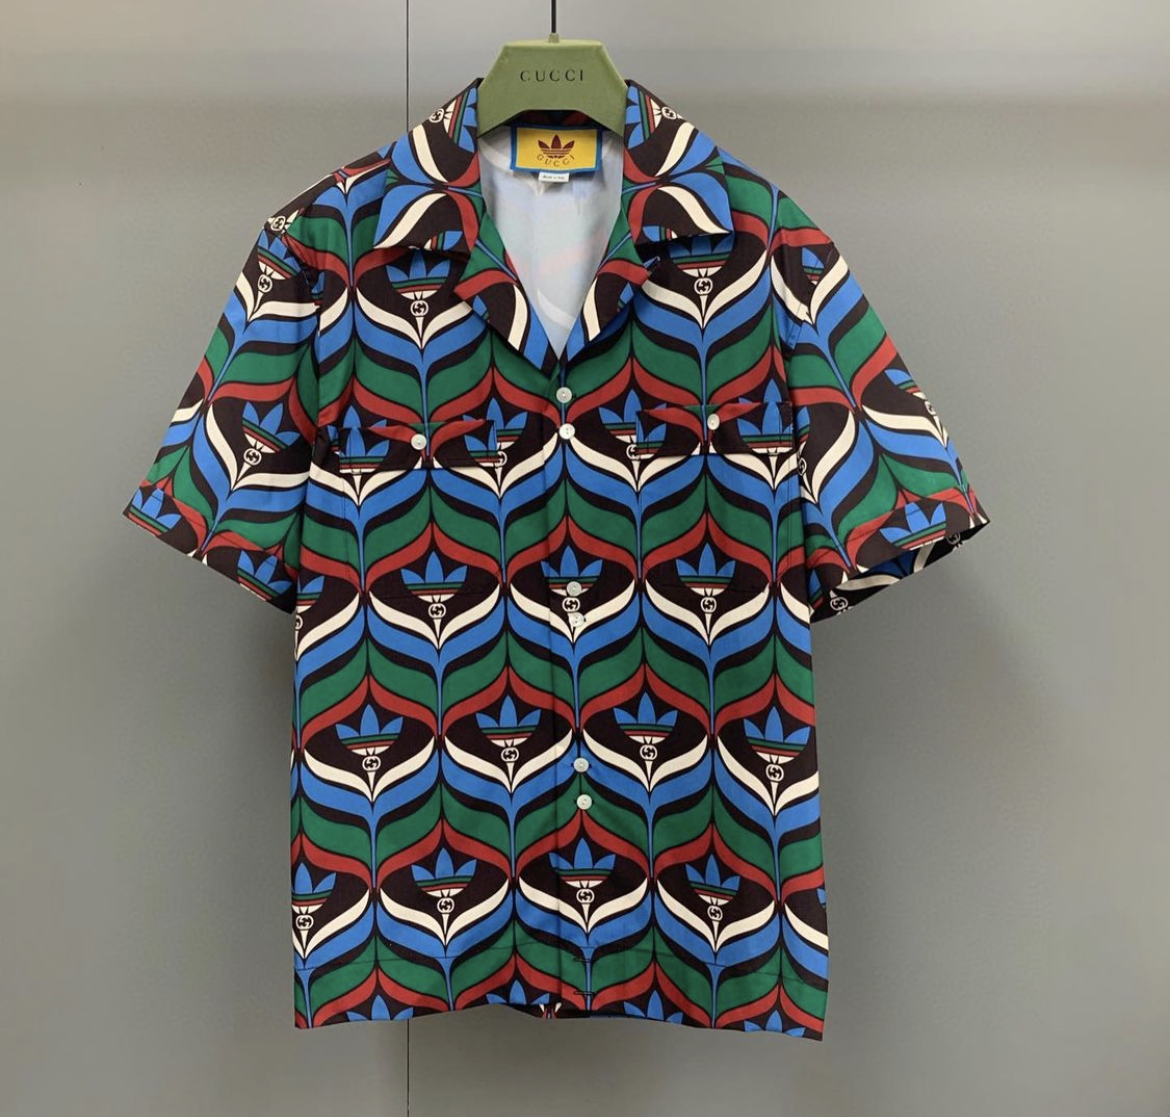 Adidas x Gucci Trefoil print bowling shirt – billionairemart